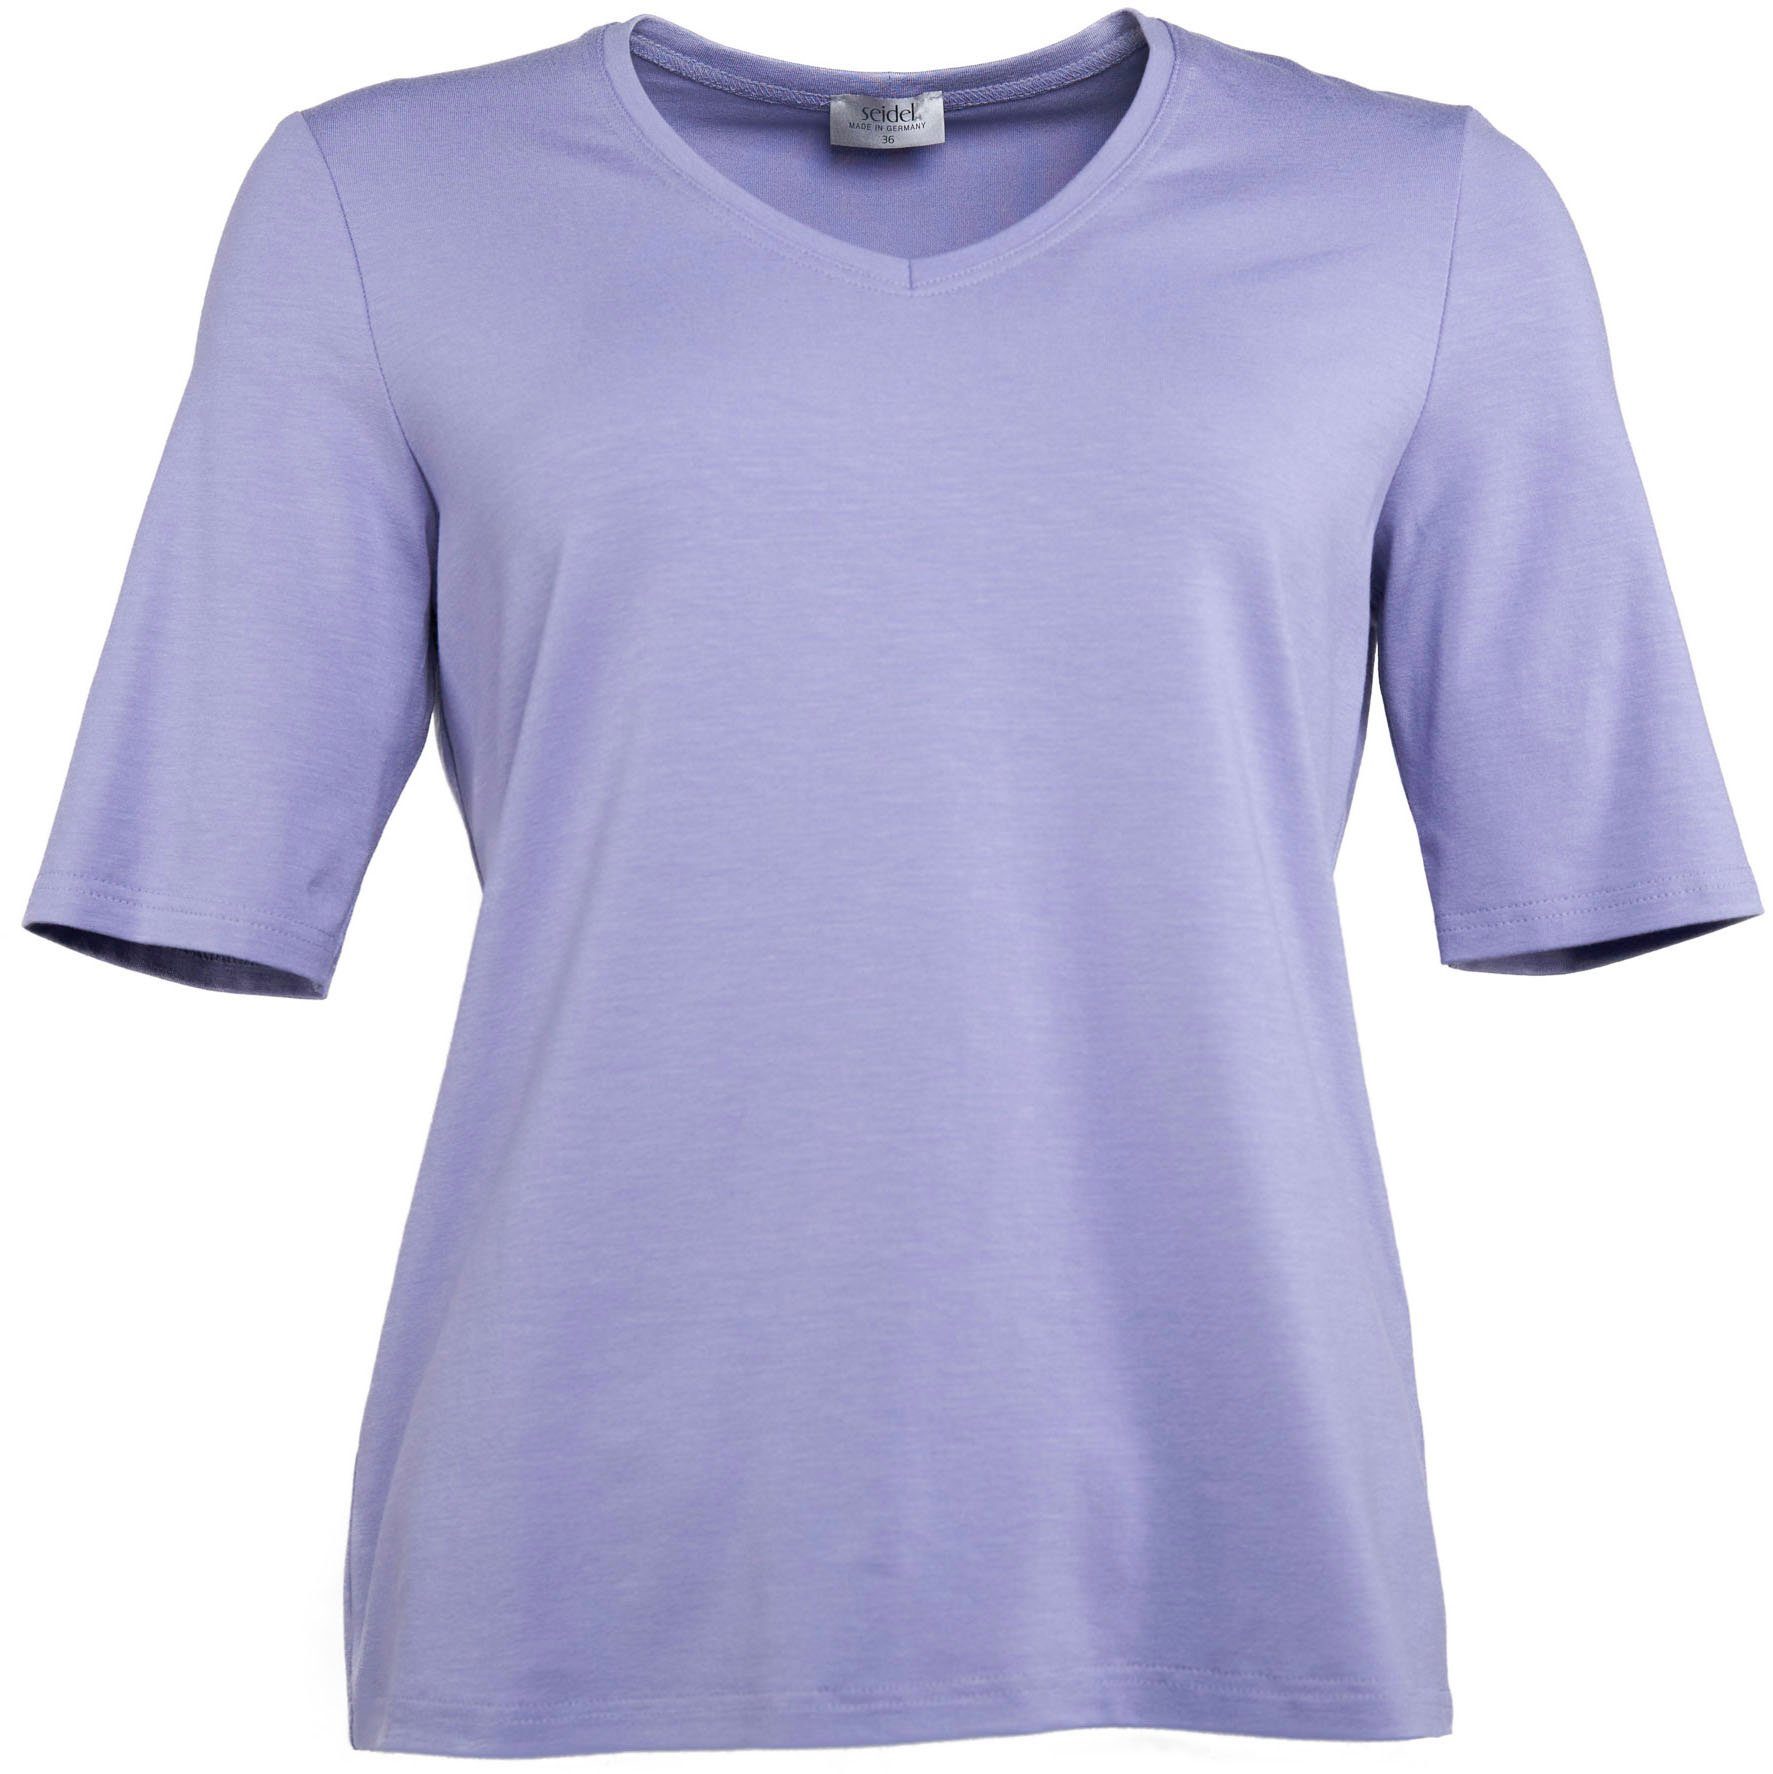 Seidel Moden V-Shirt mit Halbarm flieder Material, GERMANY MADE softem IN aus